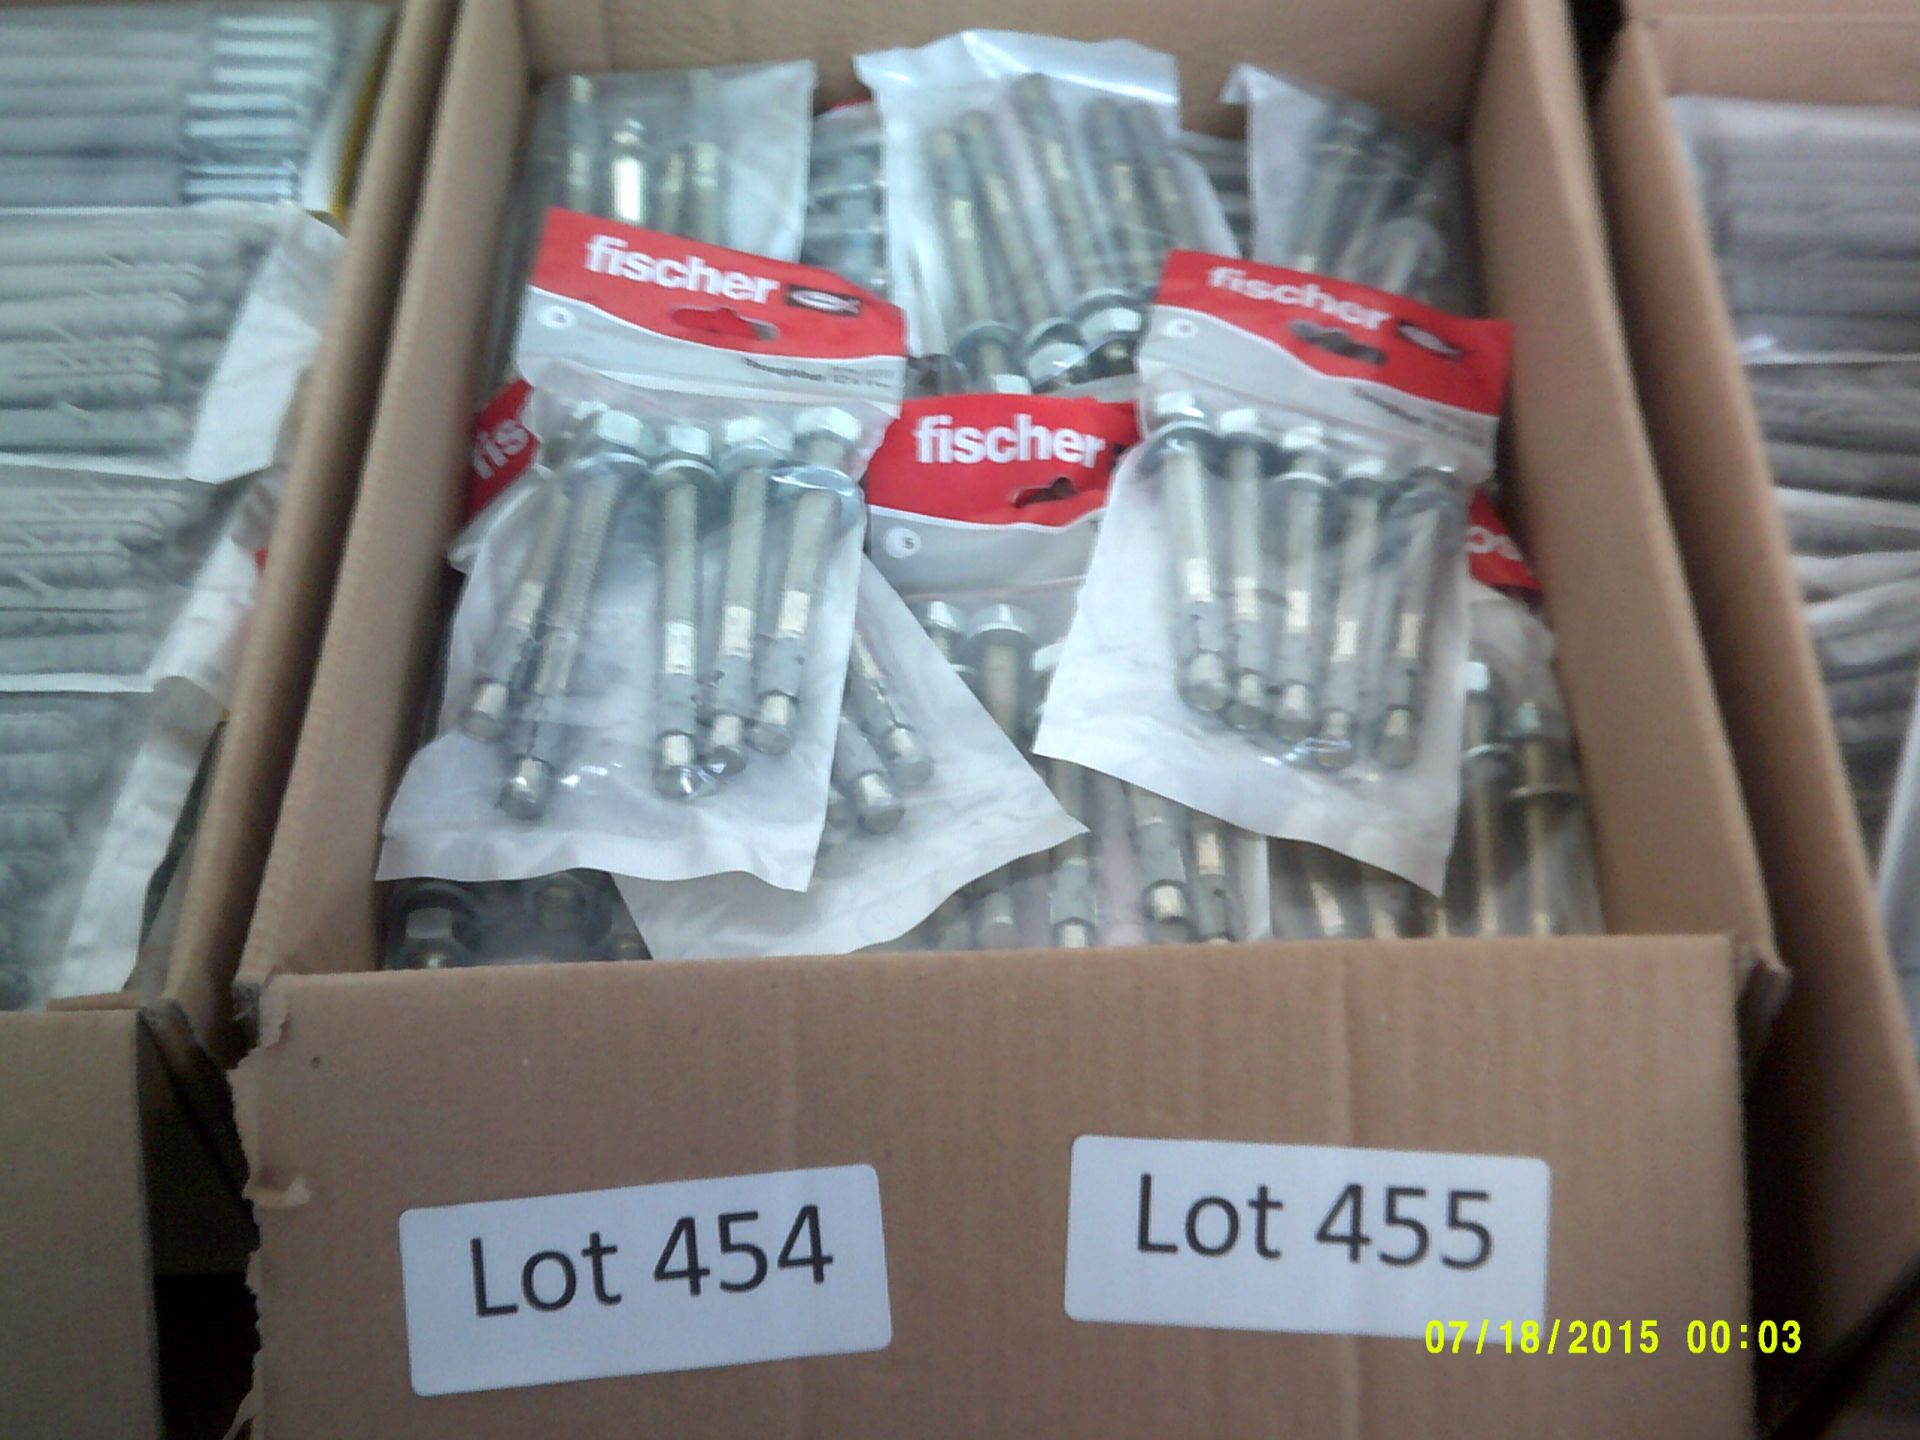 3 off Fischer Throughbolt 12x115mm,Each pack contains 5 pieces. New